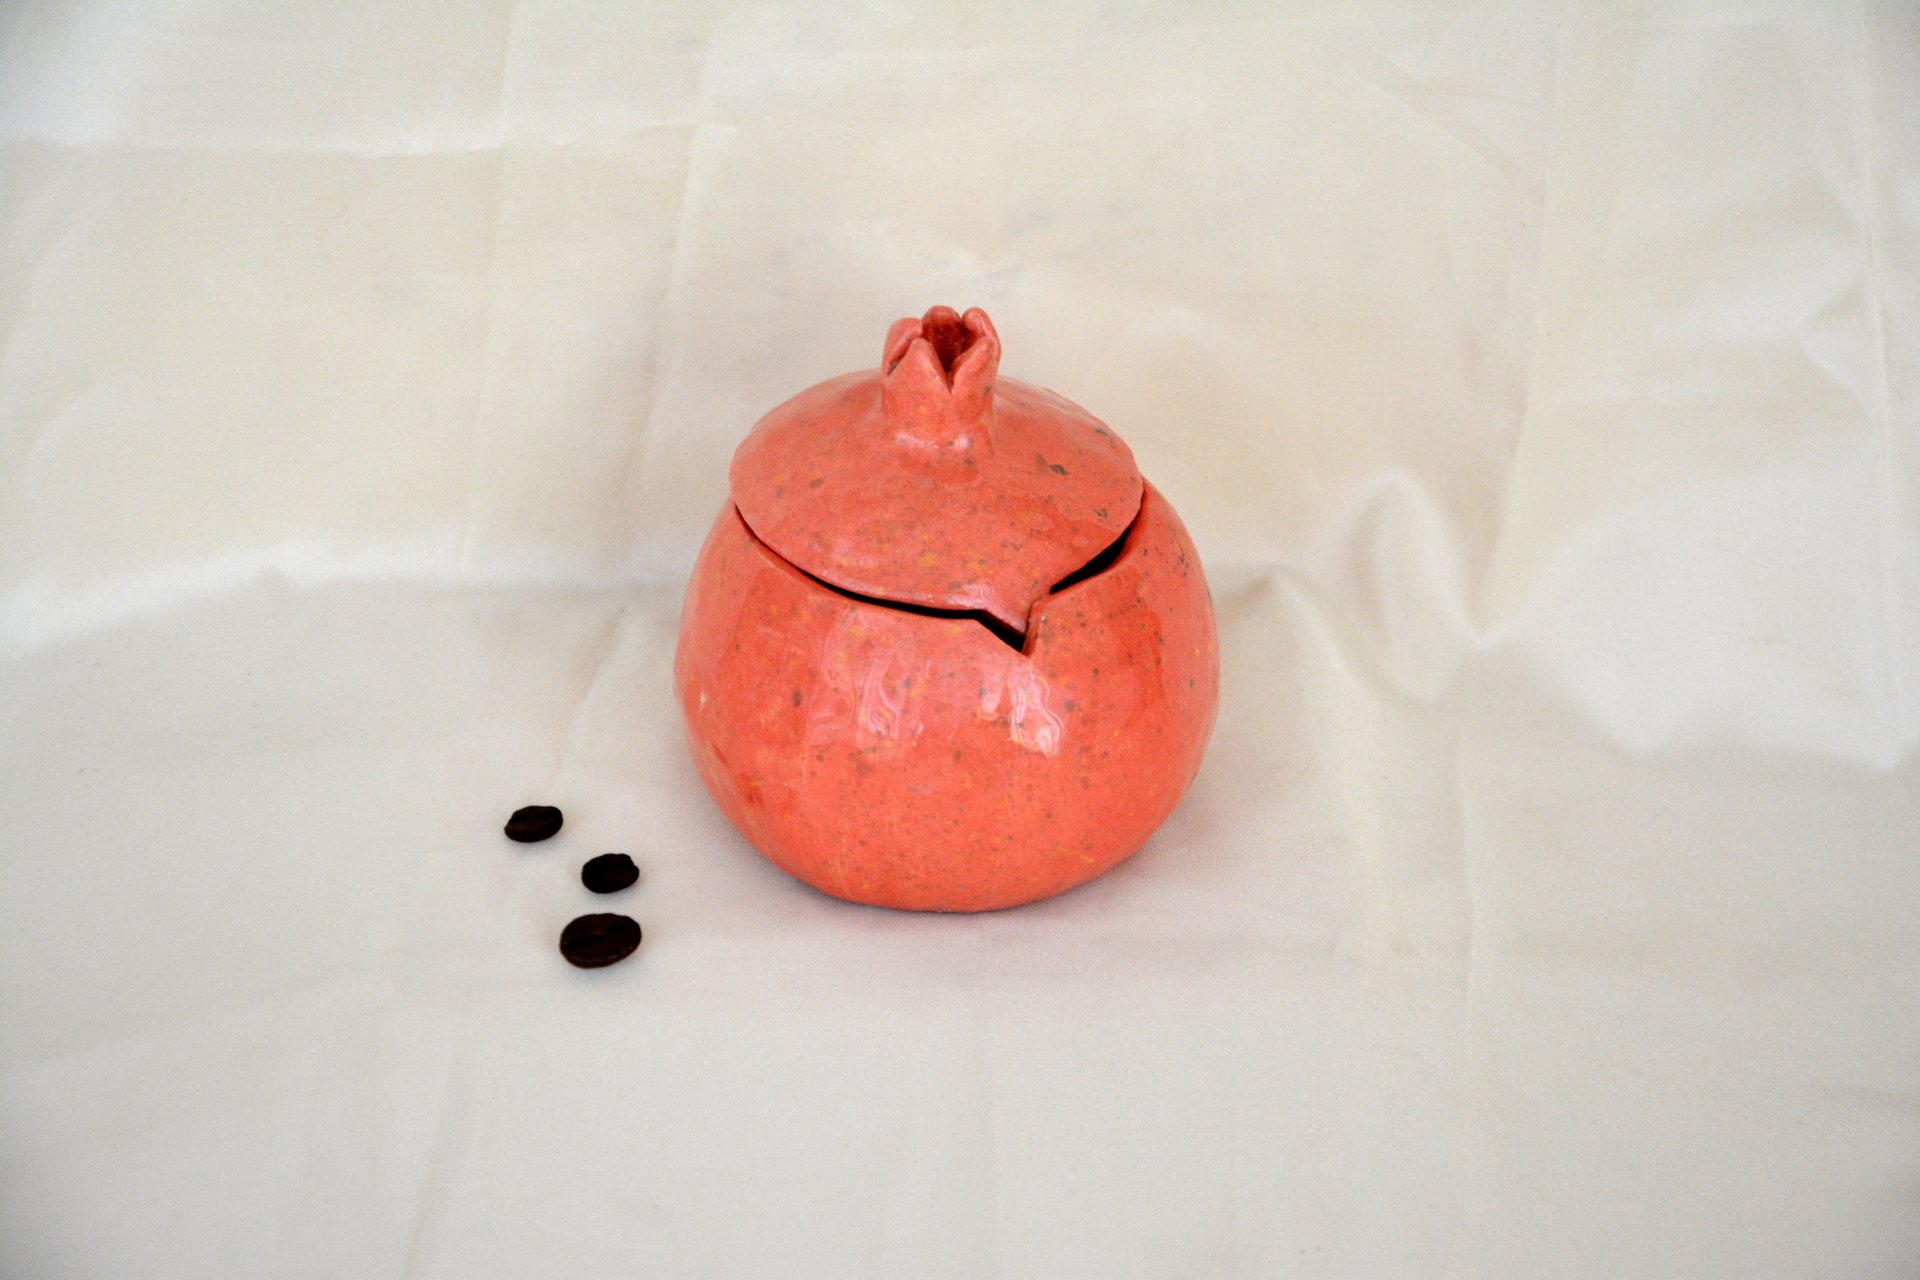 Pink Pomegranate - Ceramic jars, 9.5 cm * 9.5 cm, height - 10 cm, photo 2 of 2.